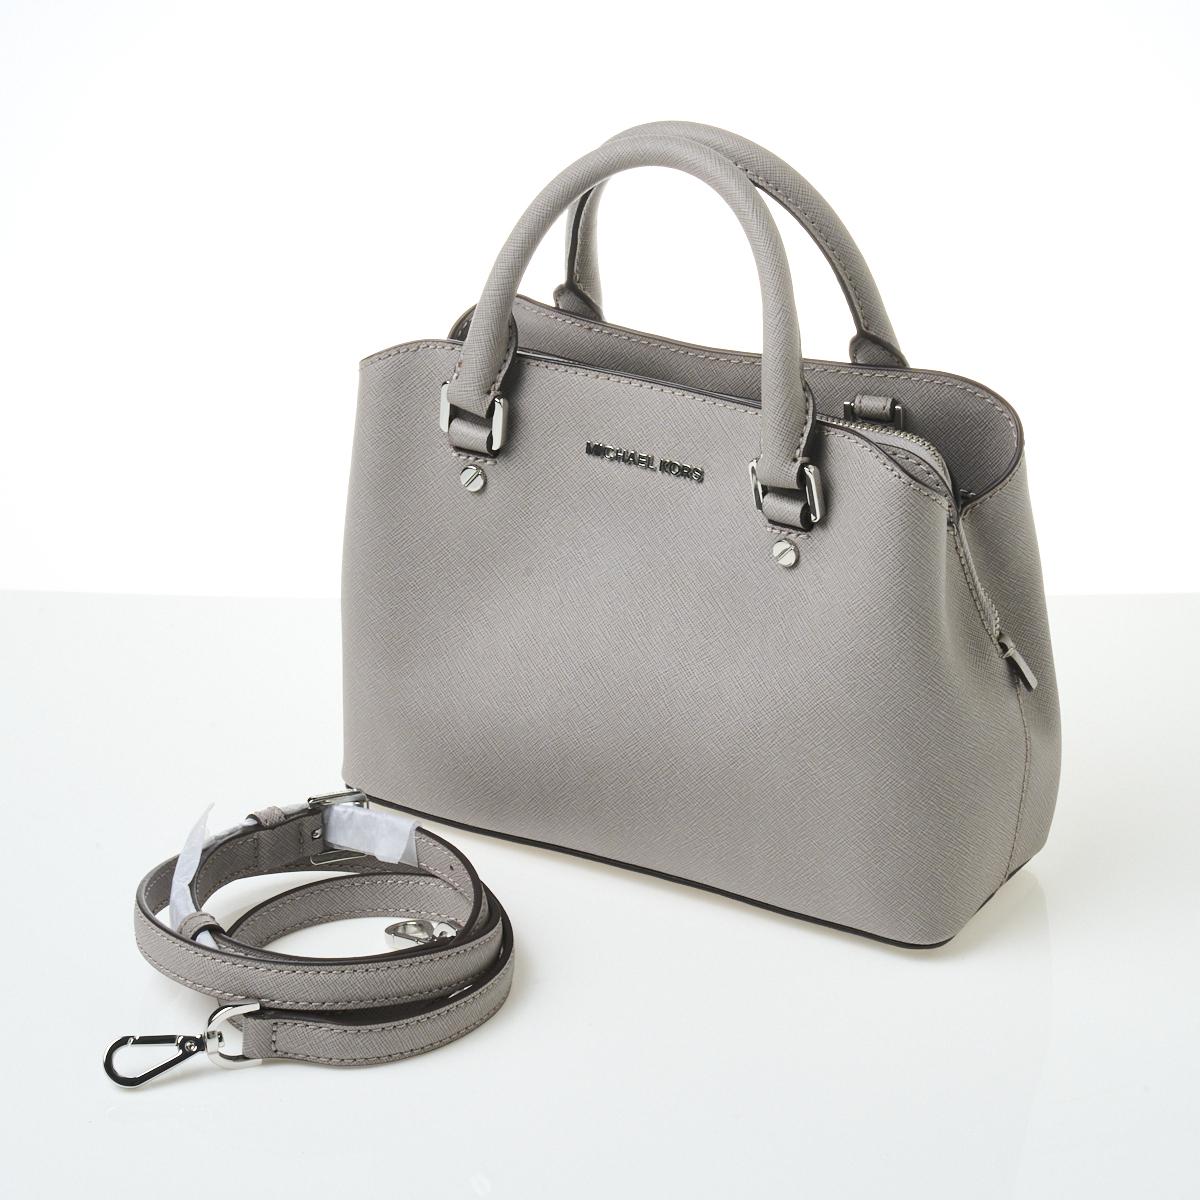 Michael Kors Grey Leather Mini Tote Bag